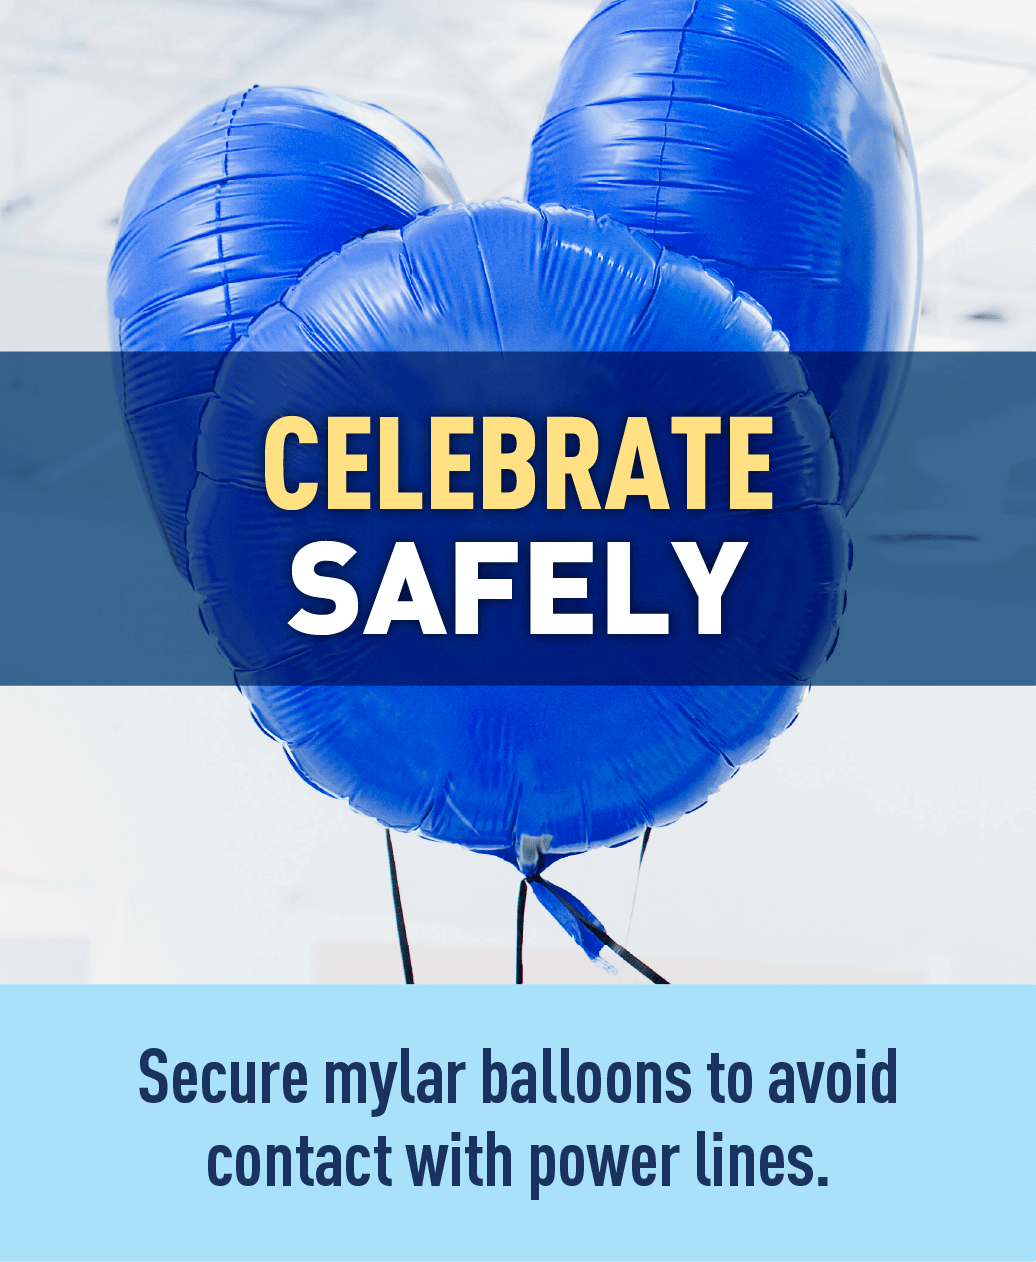 Image of mylar balloons.